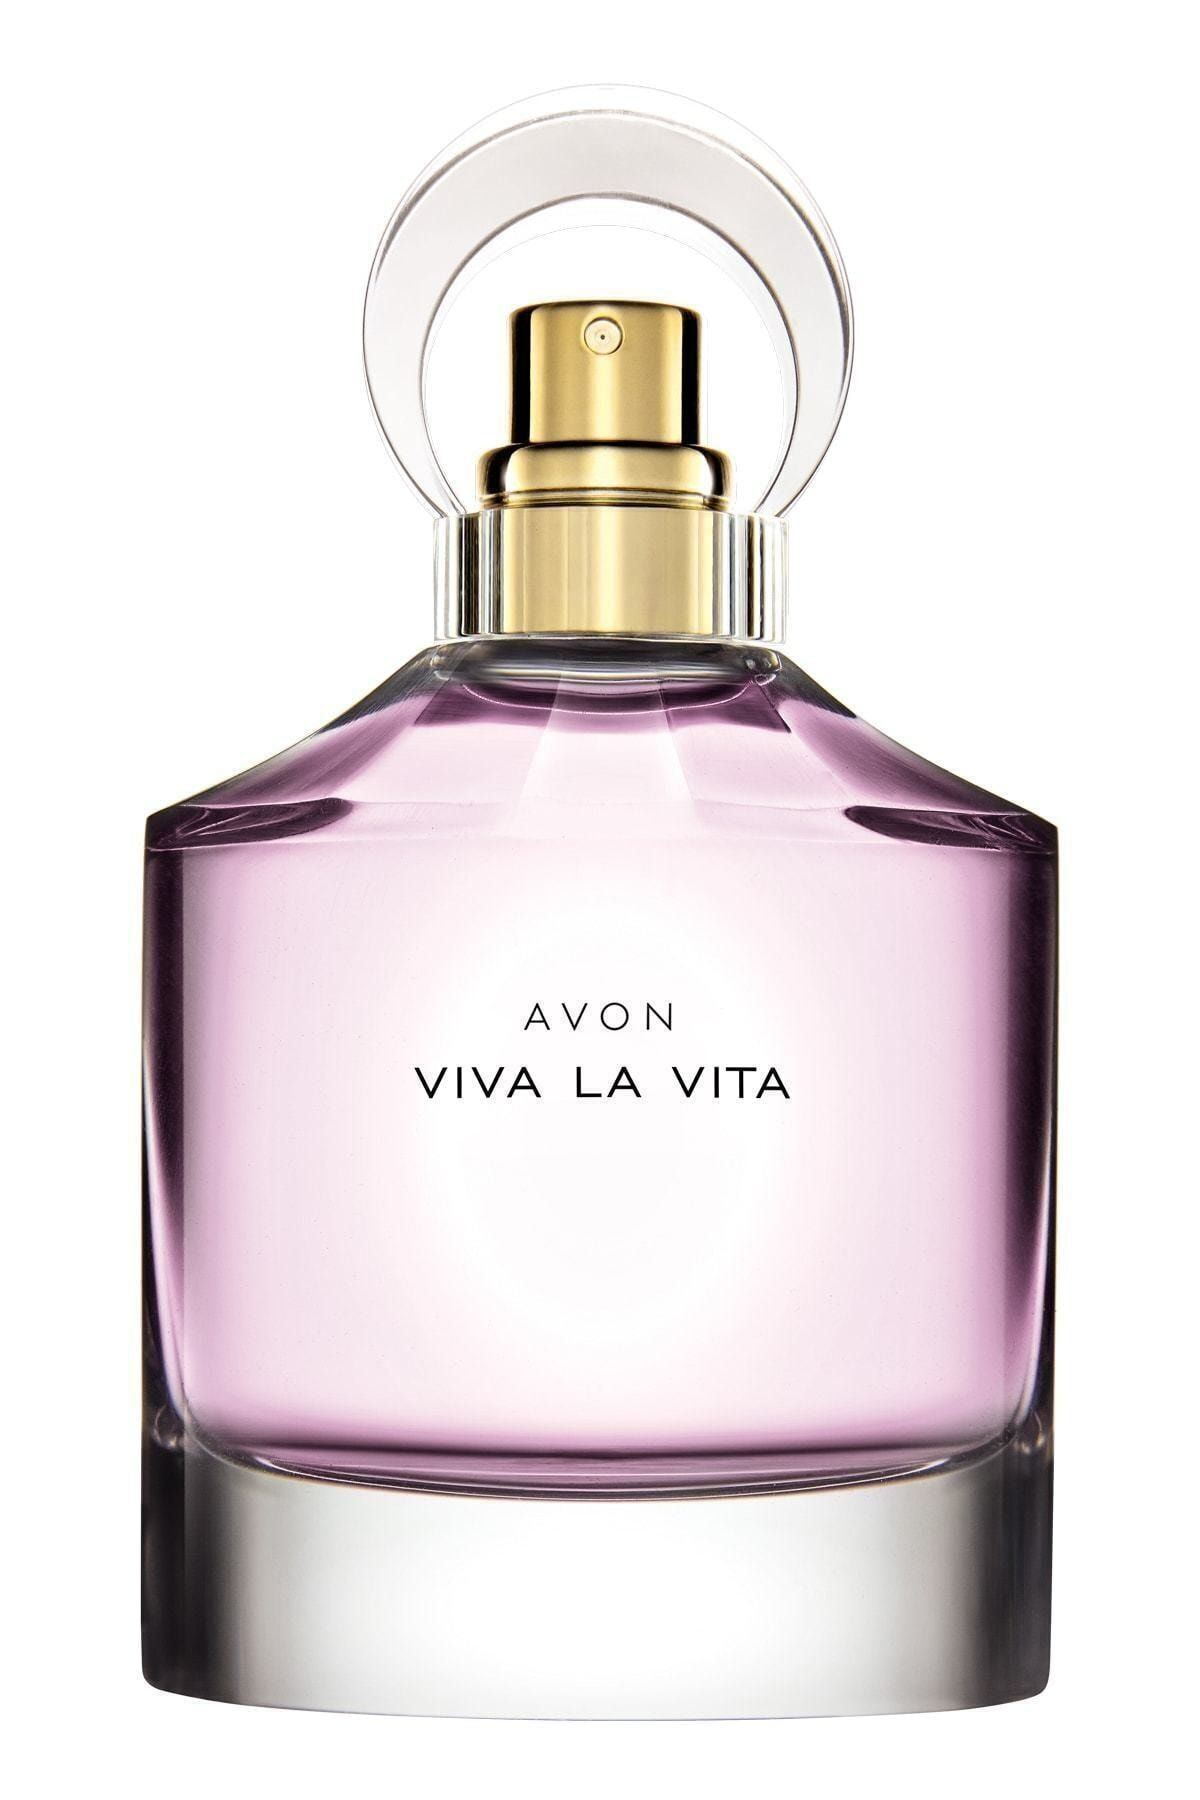 Avon عطر زنانه ویوا لا ویتا با حجم 50 میلی لیتر